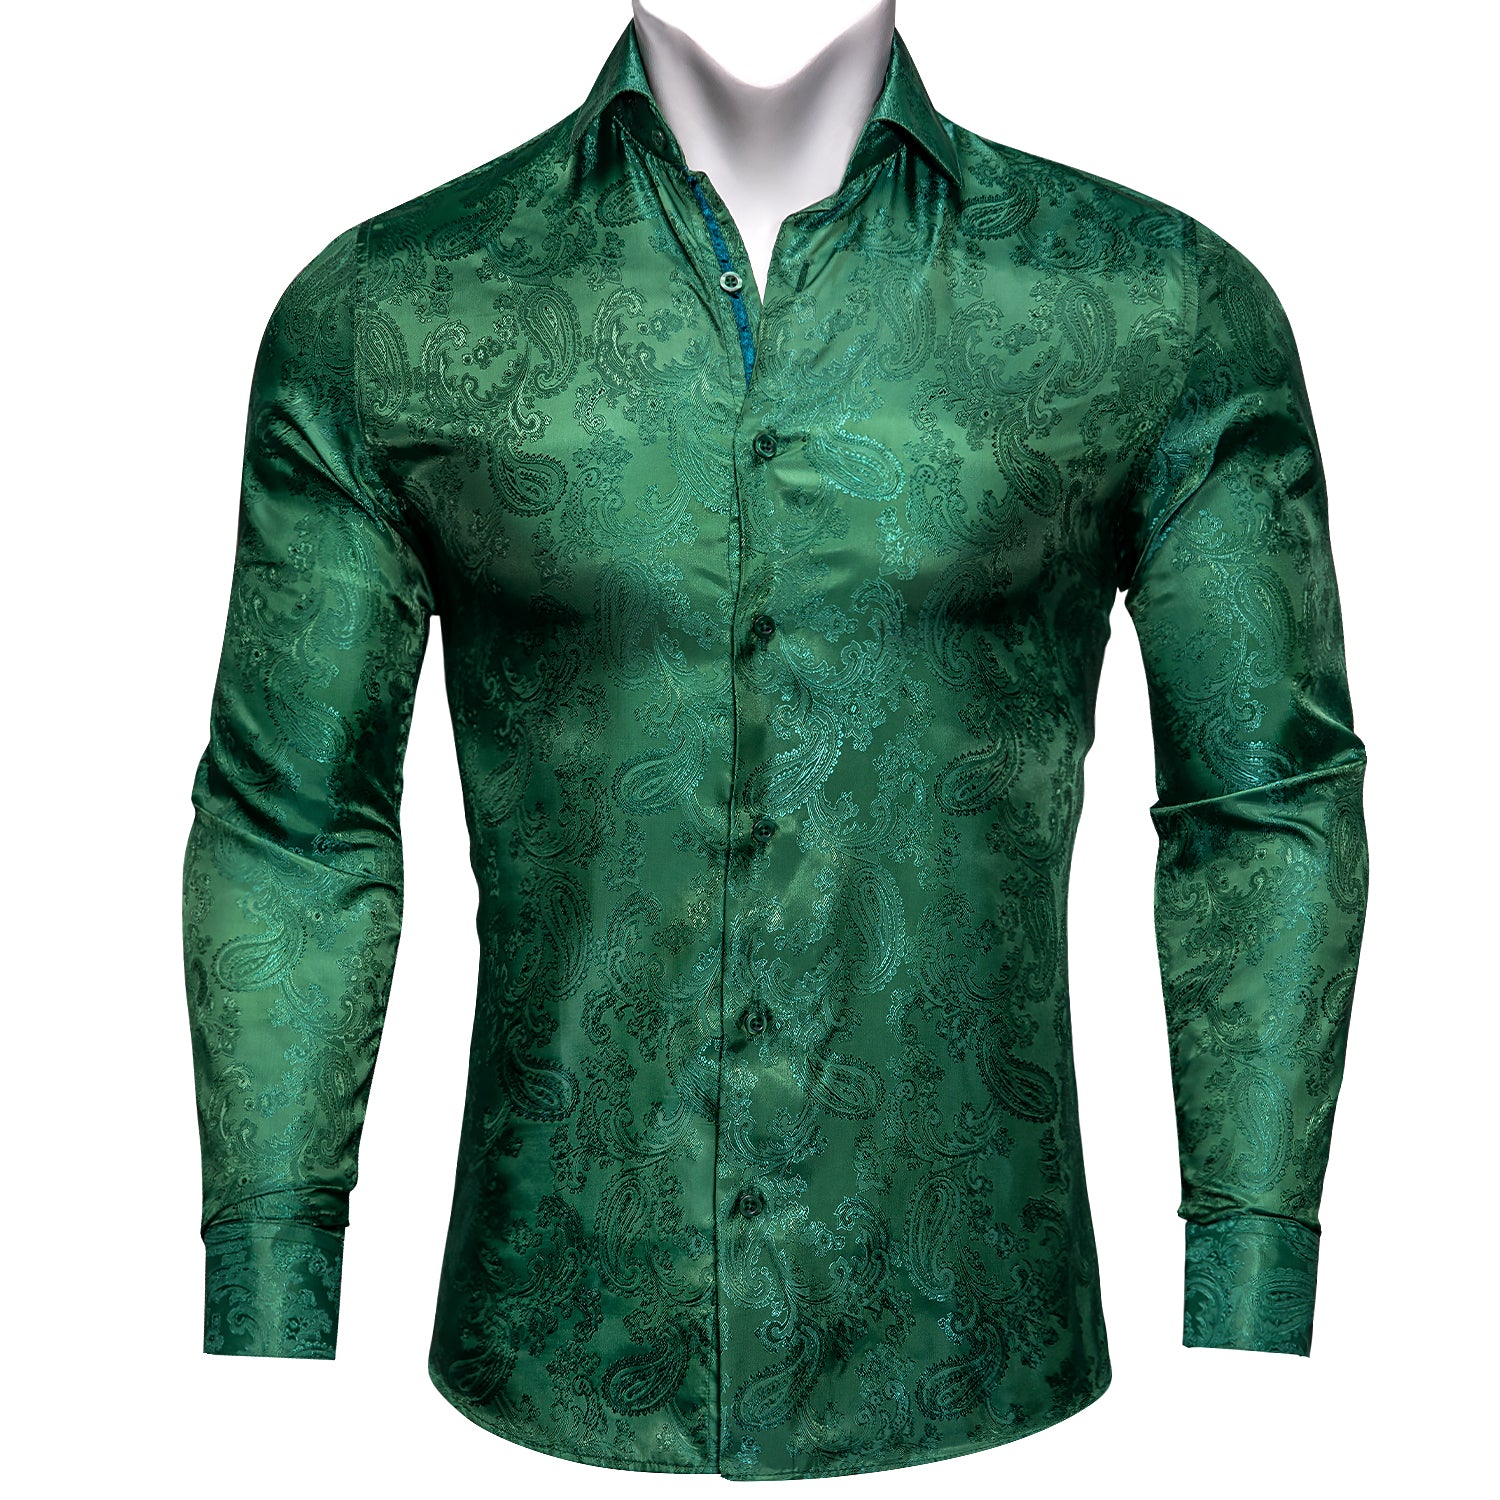 Barry.wang Luxury Green Paisley Long Sleeves Silk Shirt